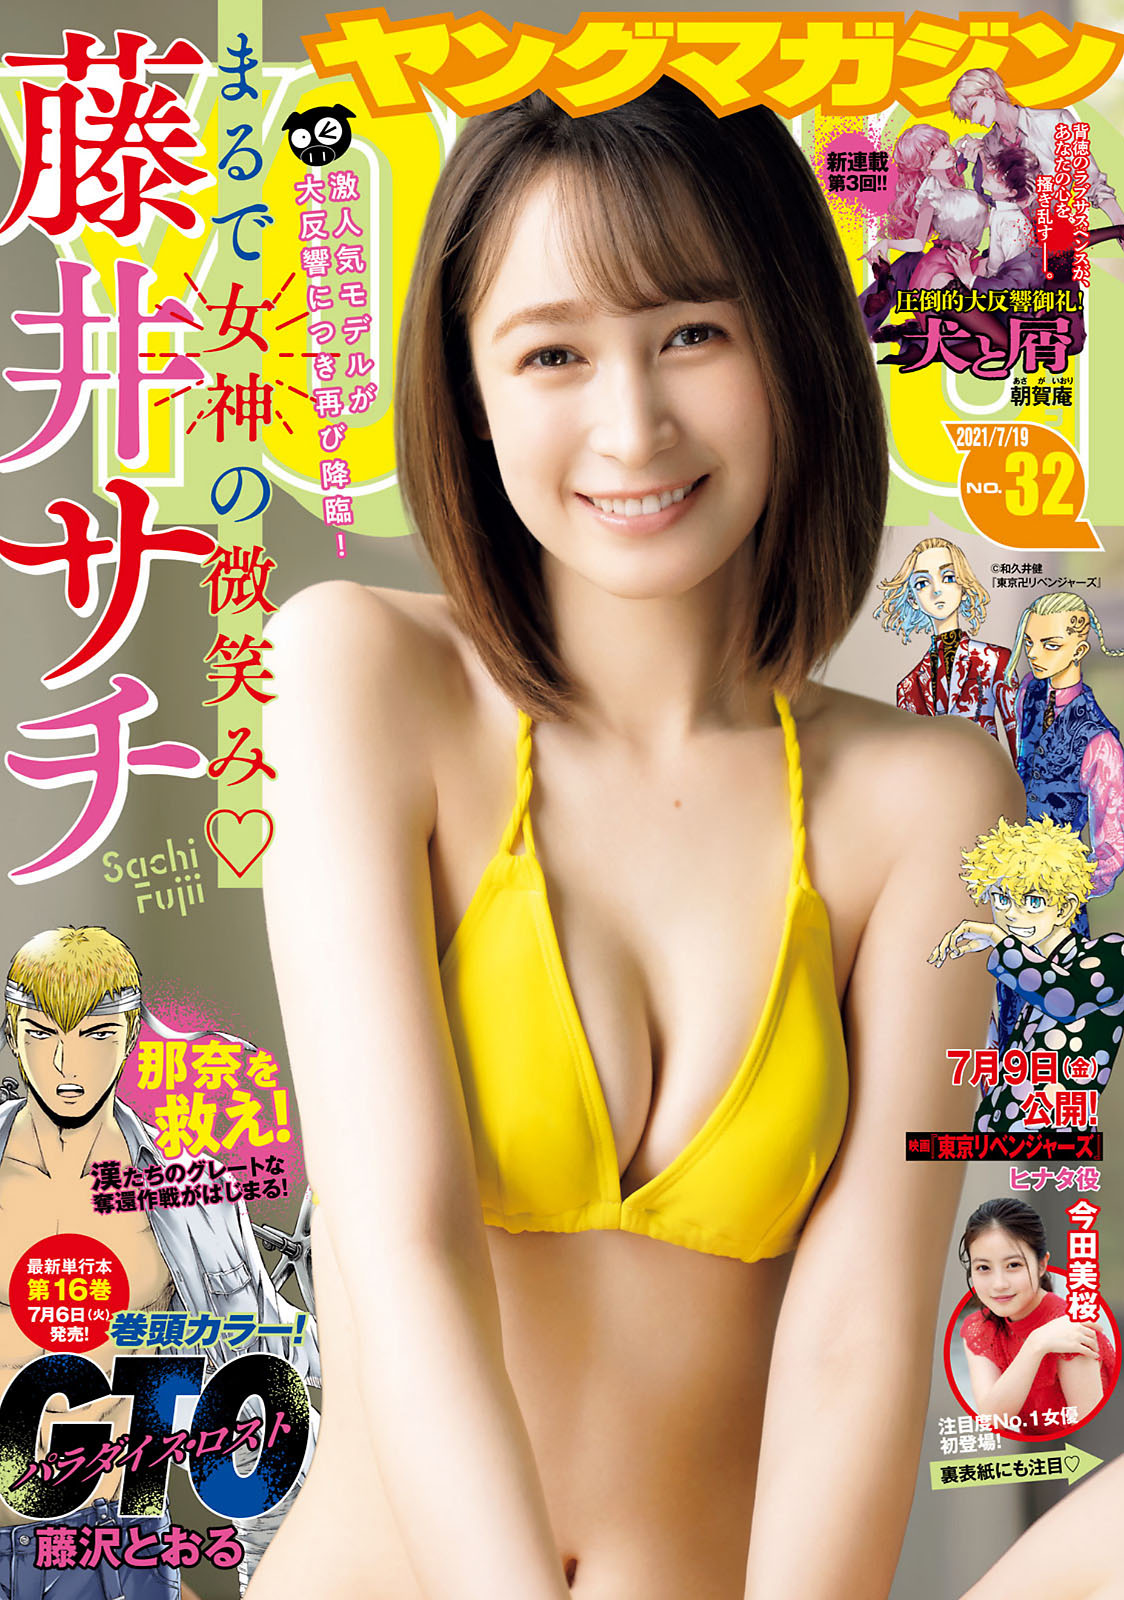 Sachi Fujii 藤井サチ, Young Magazine 2021 No.32 (ヤングマガジン 2021年32号)